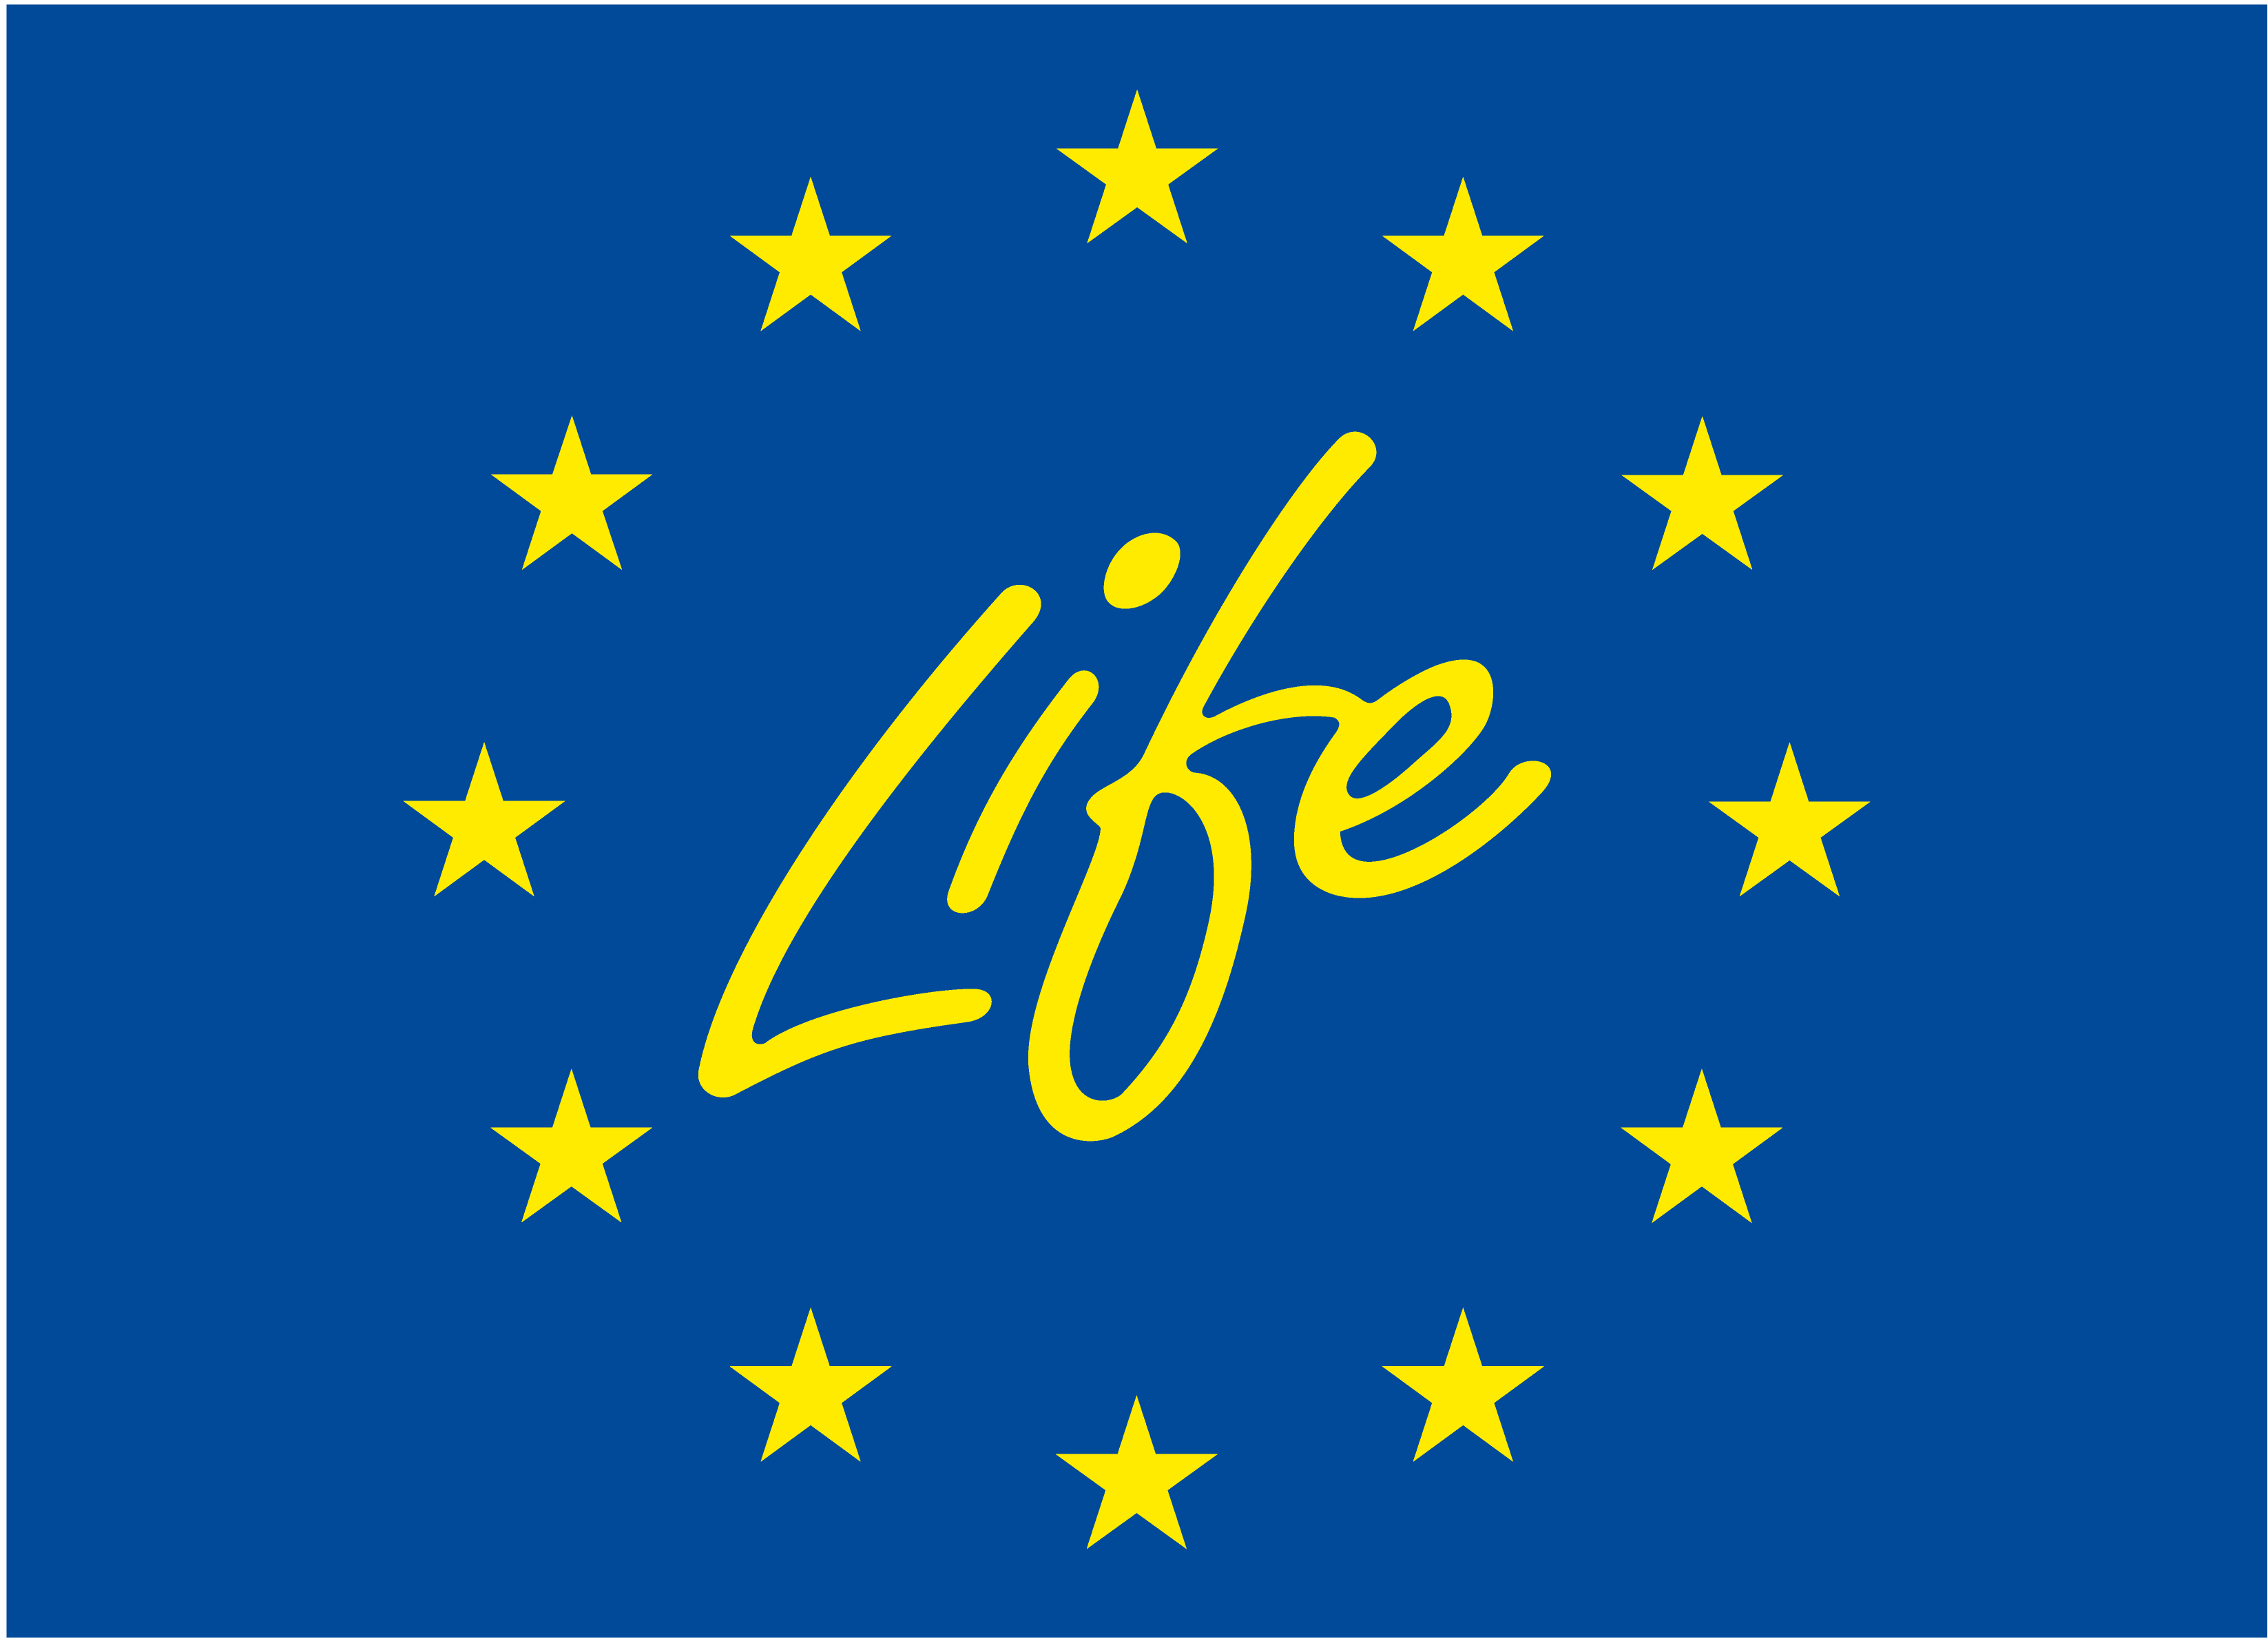 Logo life